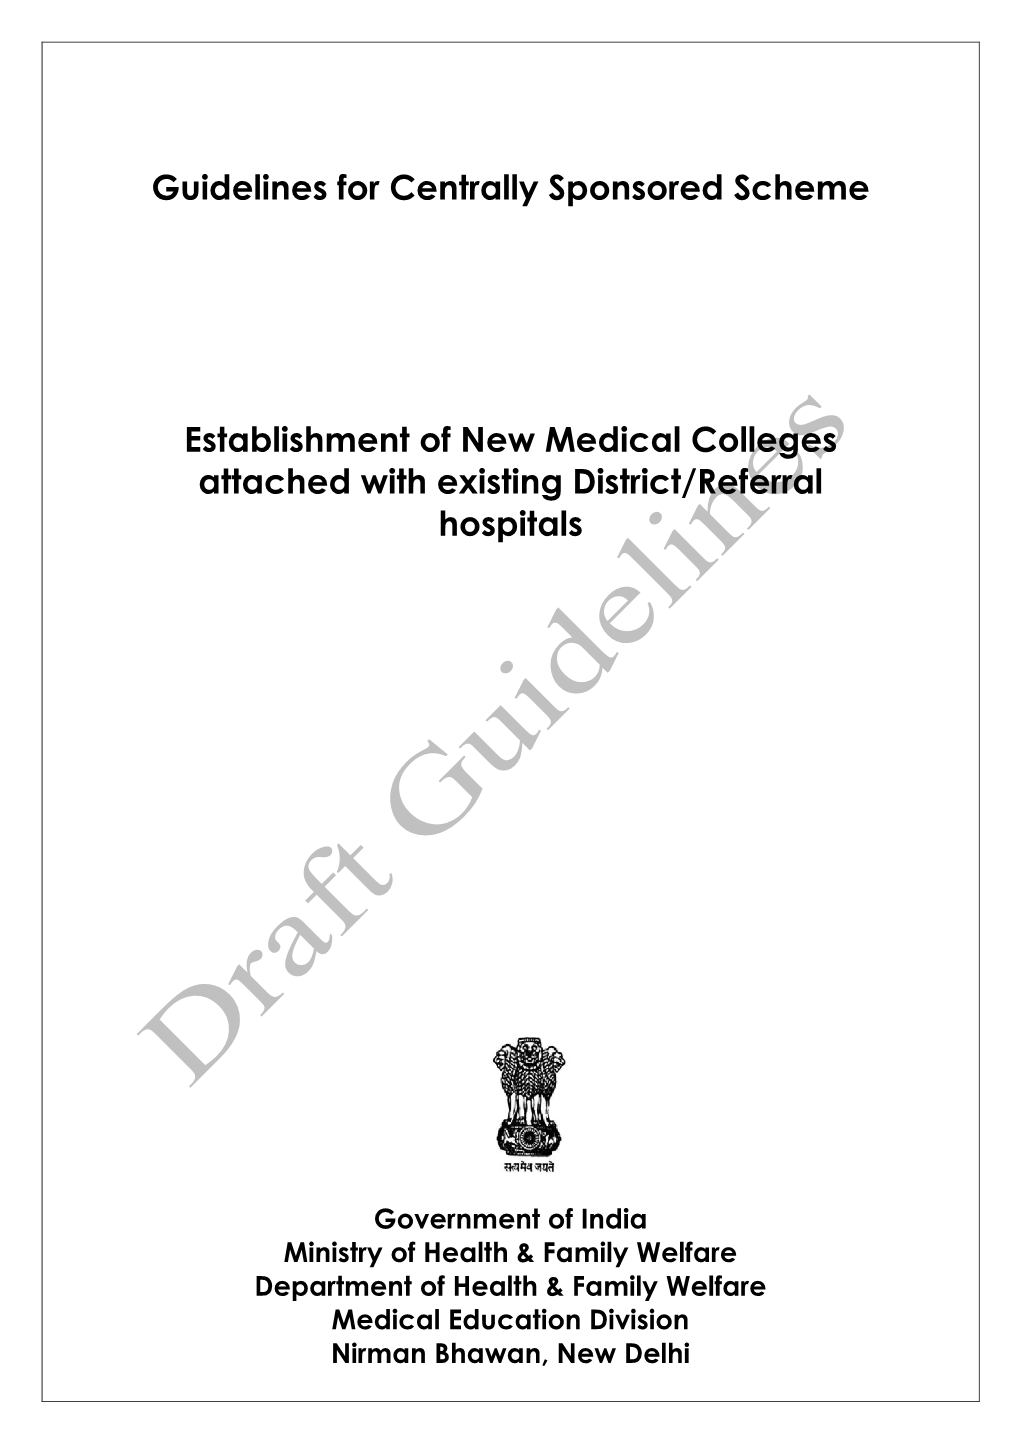 Establishing New Medical Colleges (Upgrading District Hospitals)